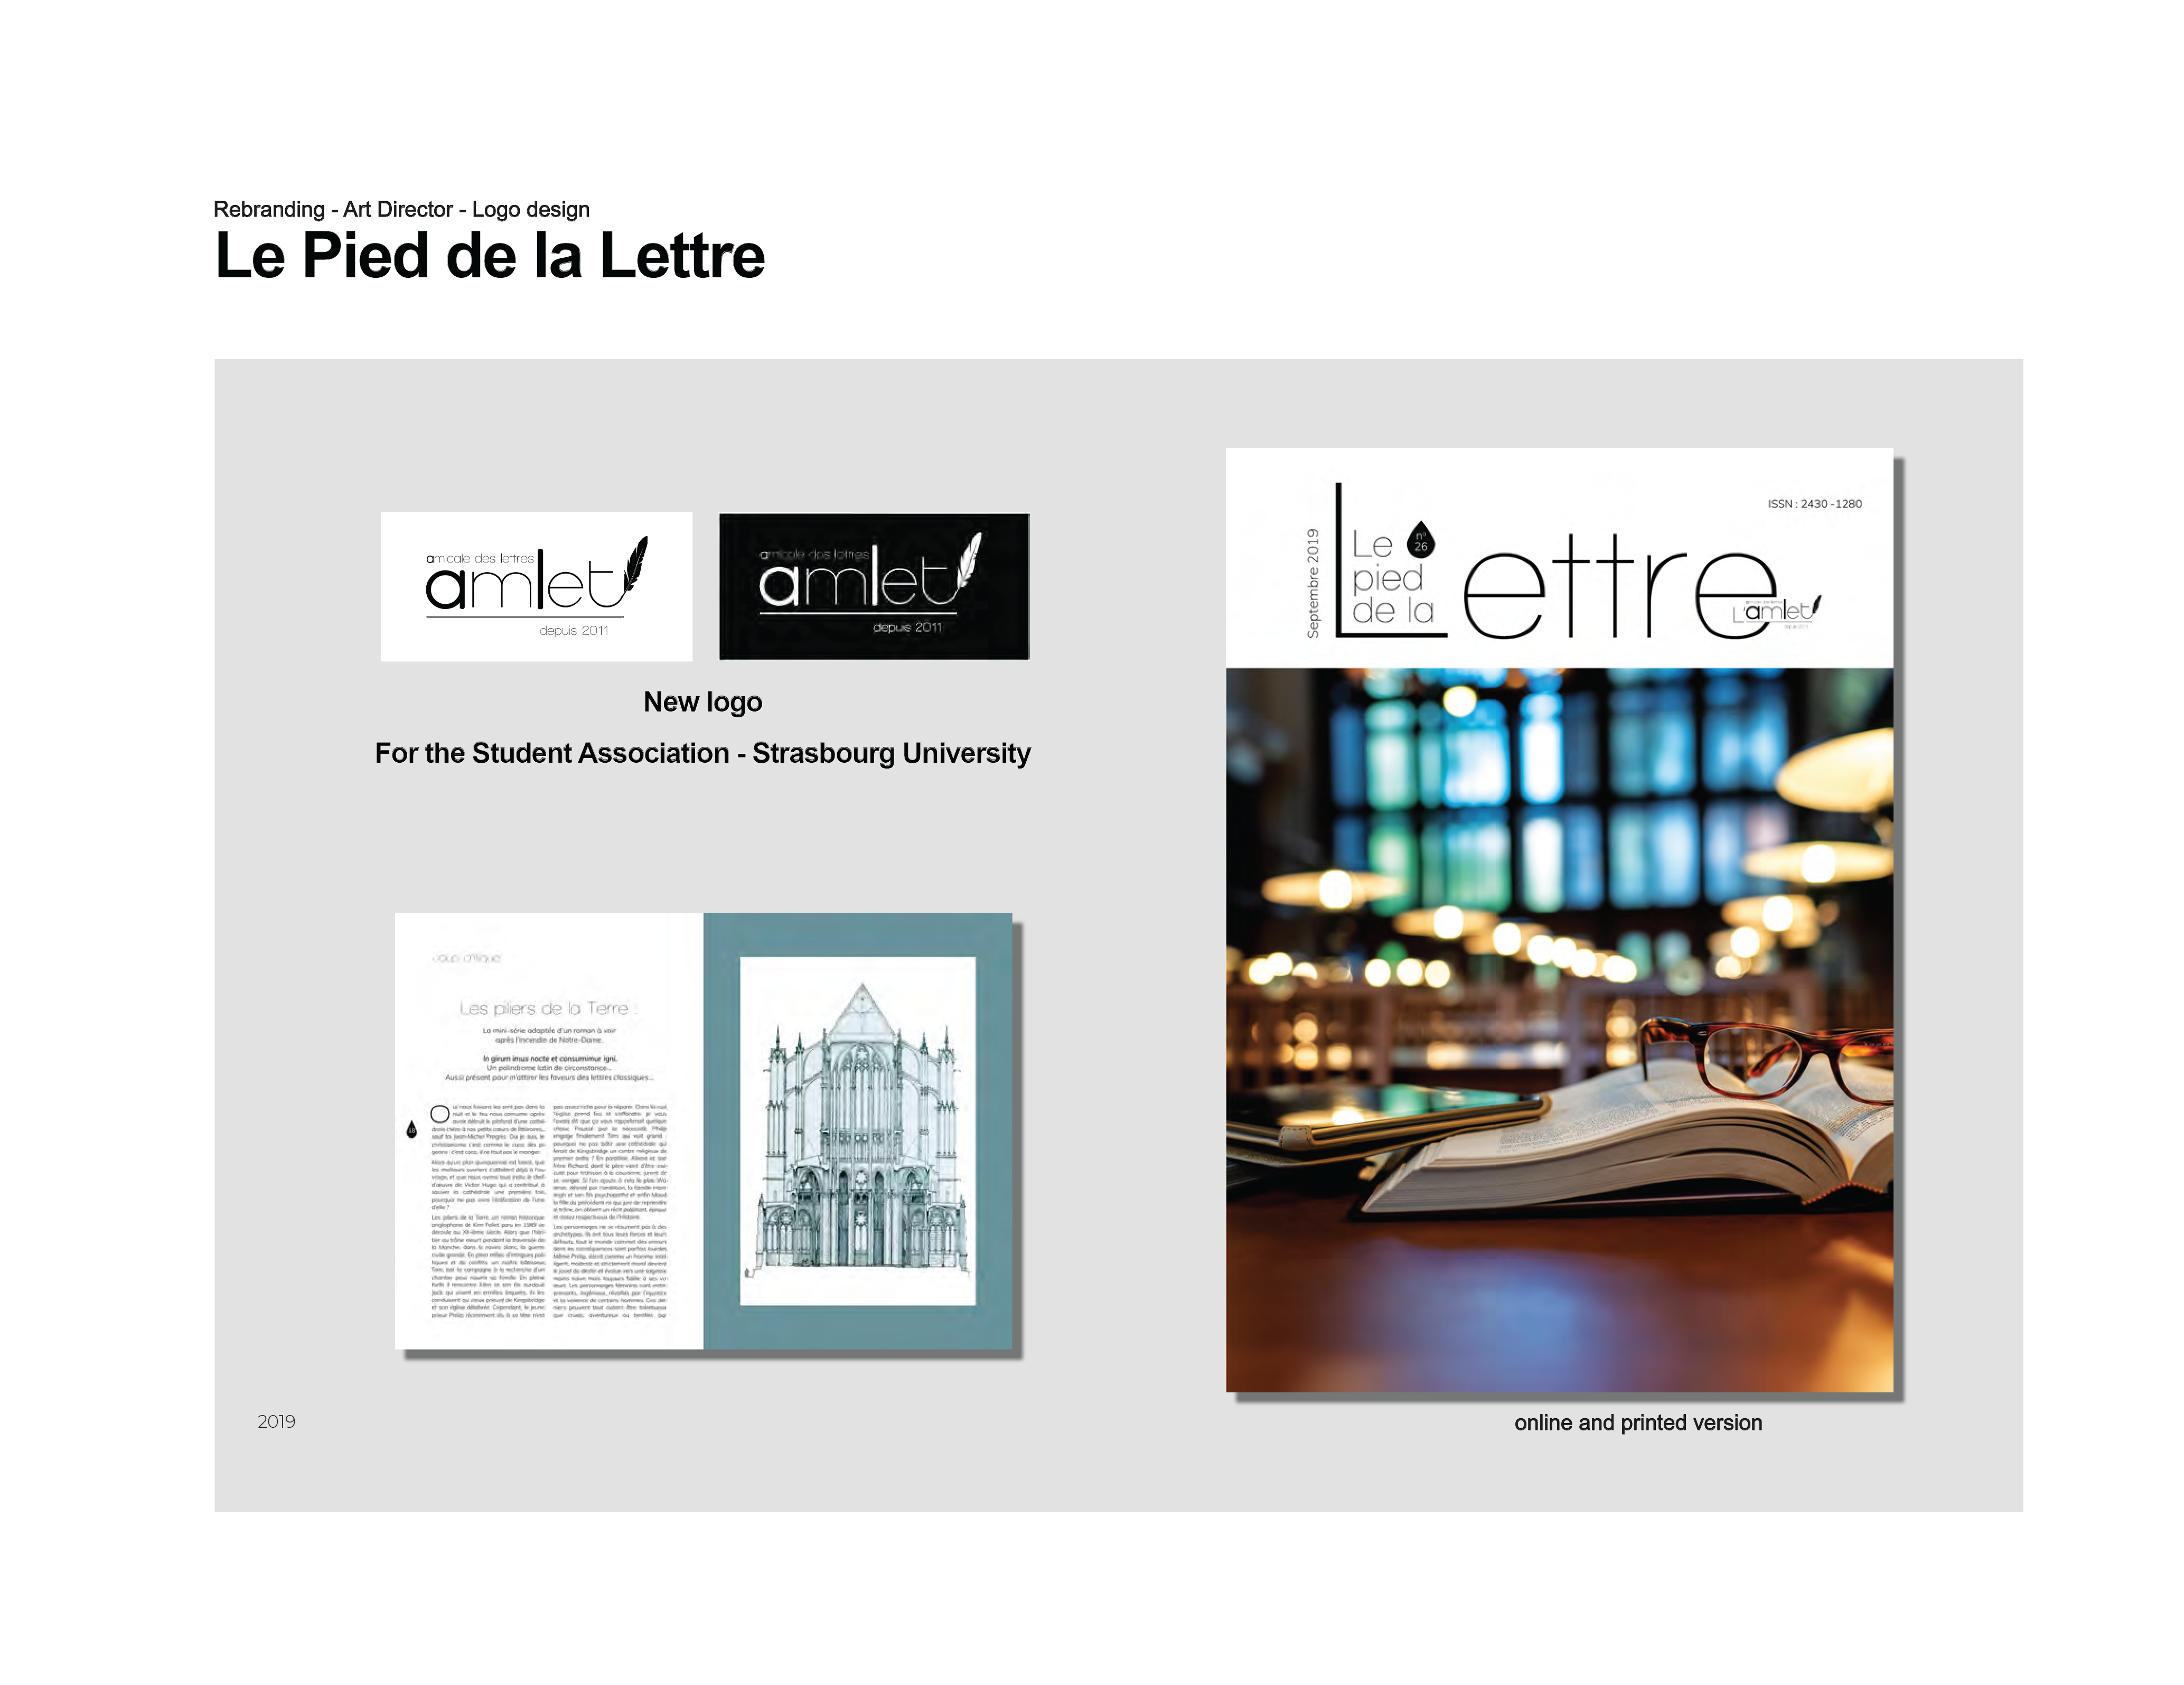 Rebranding - Art Director - Logo design

Le Pied de la Lettre

ISSN: 2430-1280

lc @®

= OTT G&amp;G.

@
=
o
~N
v
L
5
€
&amp;
a
Q
0